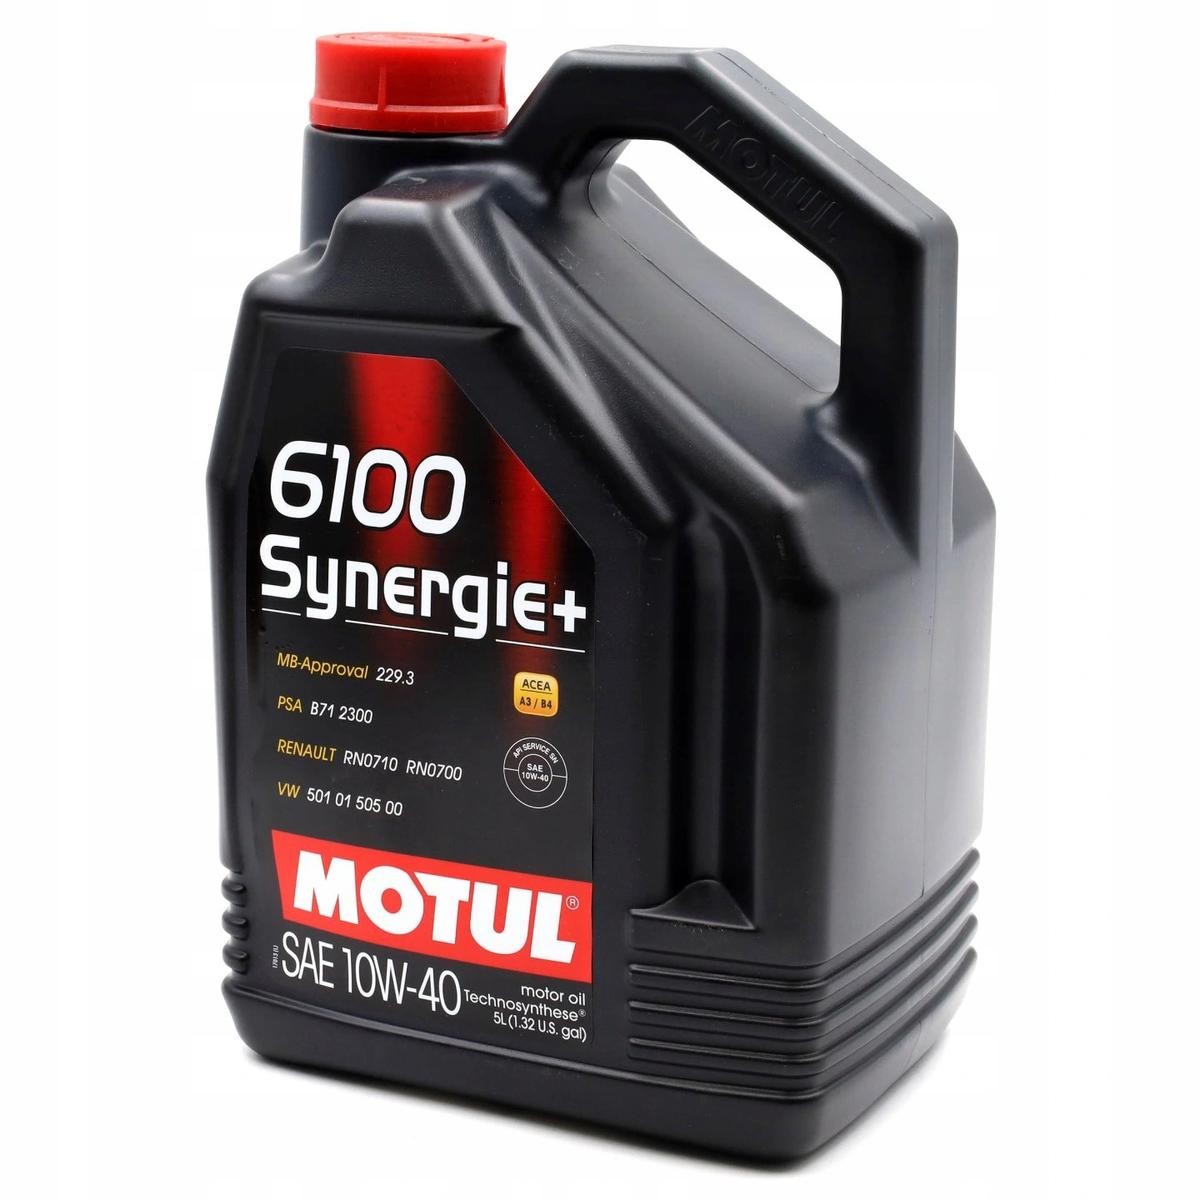 Engine oil MOTUL 10W-40, 5l, Part Synthetic Oil longlife 108647